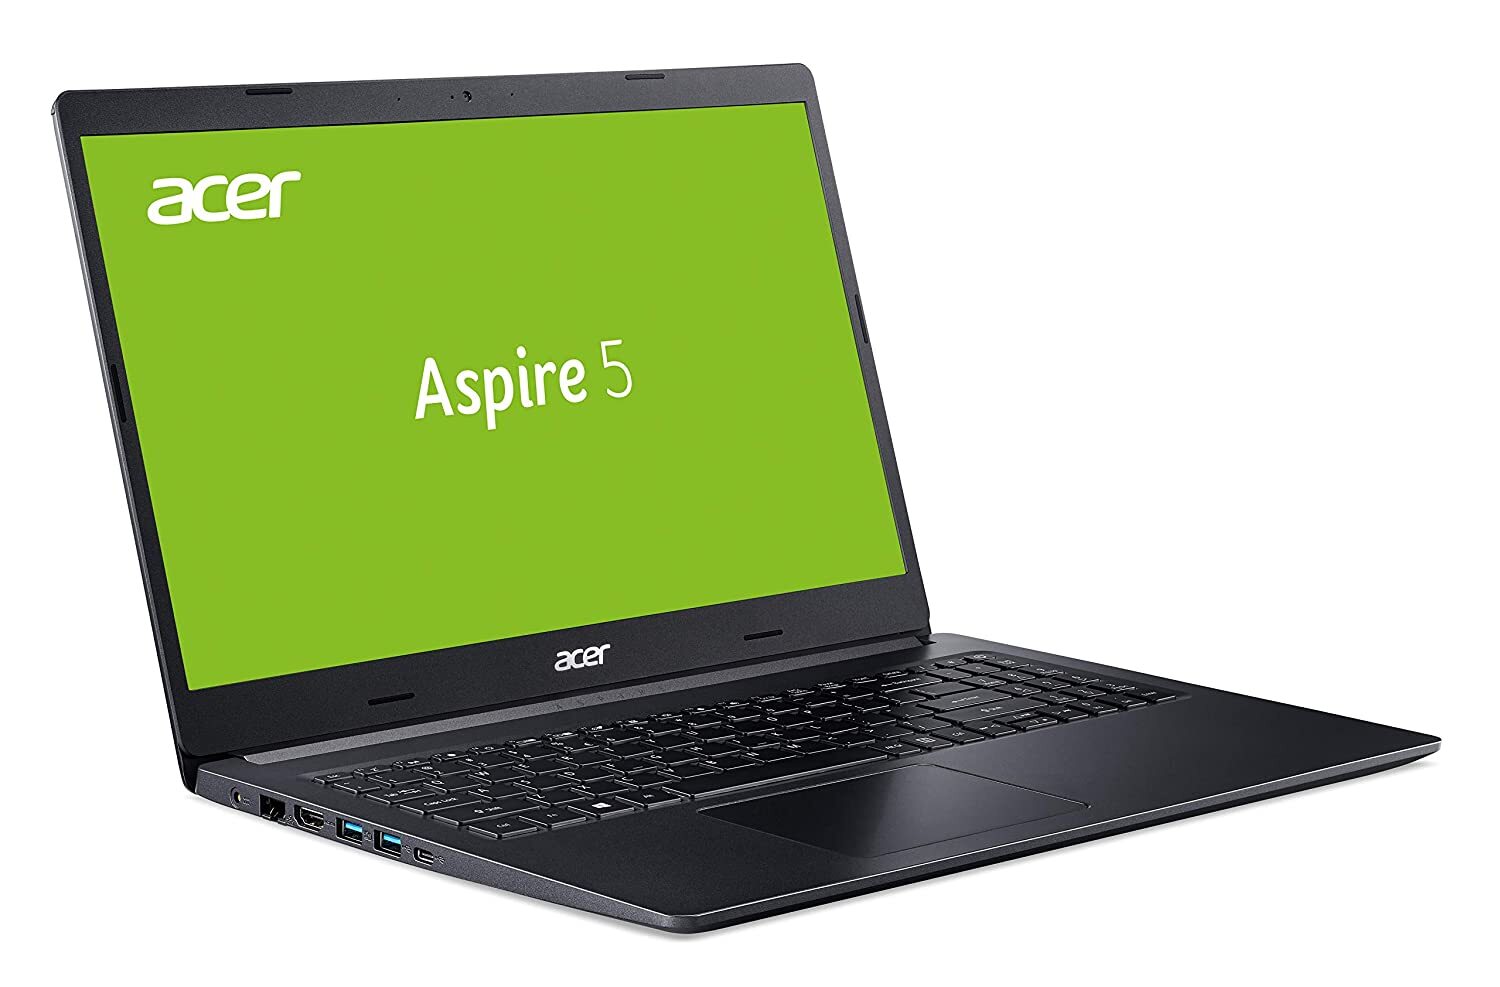 Acer Aspire 5 A515-54G Slim 10thGeneration Corei7-10210U 8GB RAM,512GB SSD,2GB MX250 Graphics 15.6" FHD Windows 10 Laptop Silver-M000000000323 www.mysocially.com